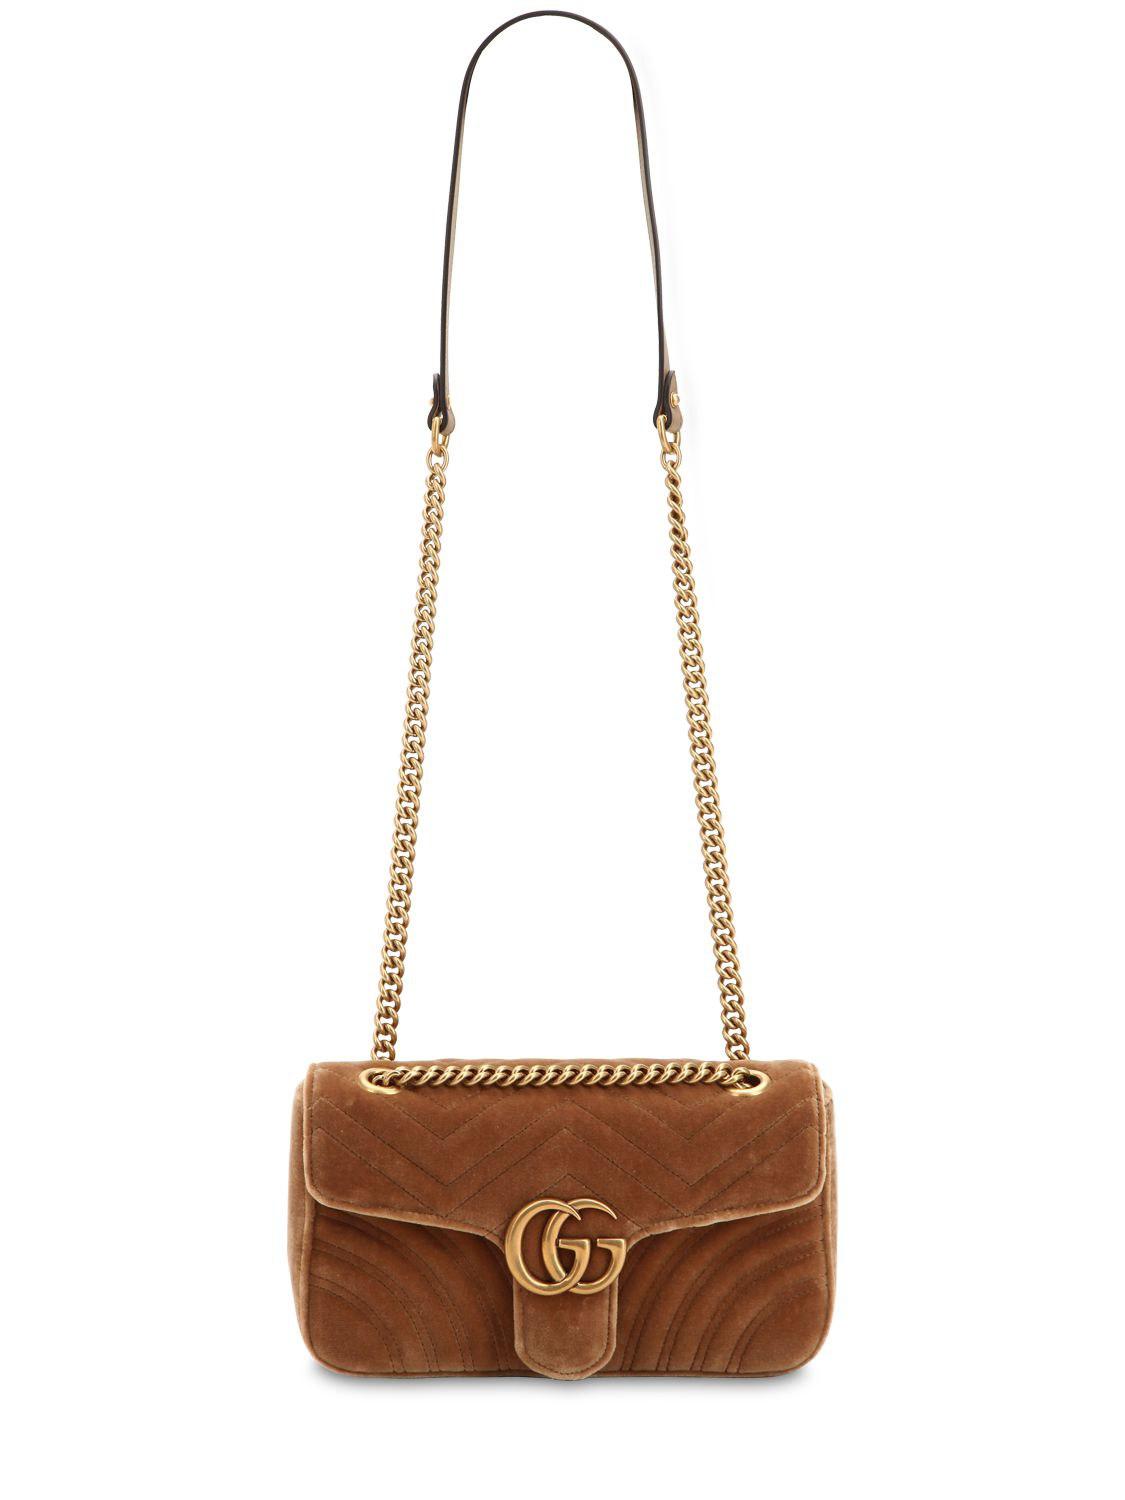 Gucci Small Gg Marmont 2.0 Velvet Shoulder Bag in Beige (Natural) - Lyst